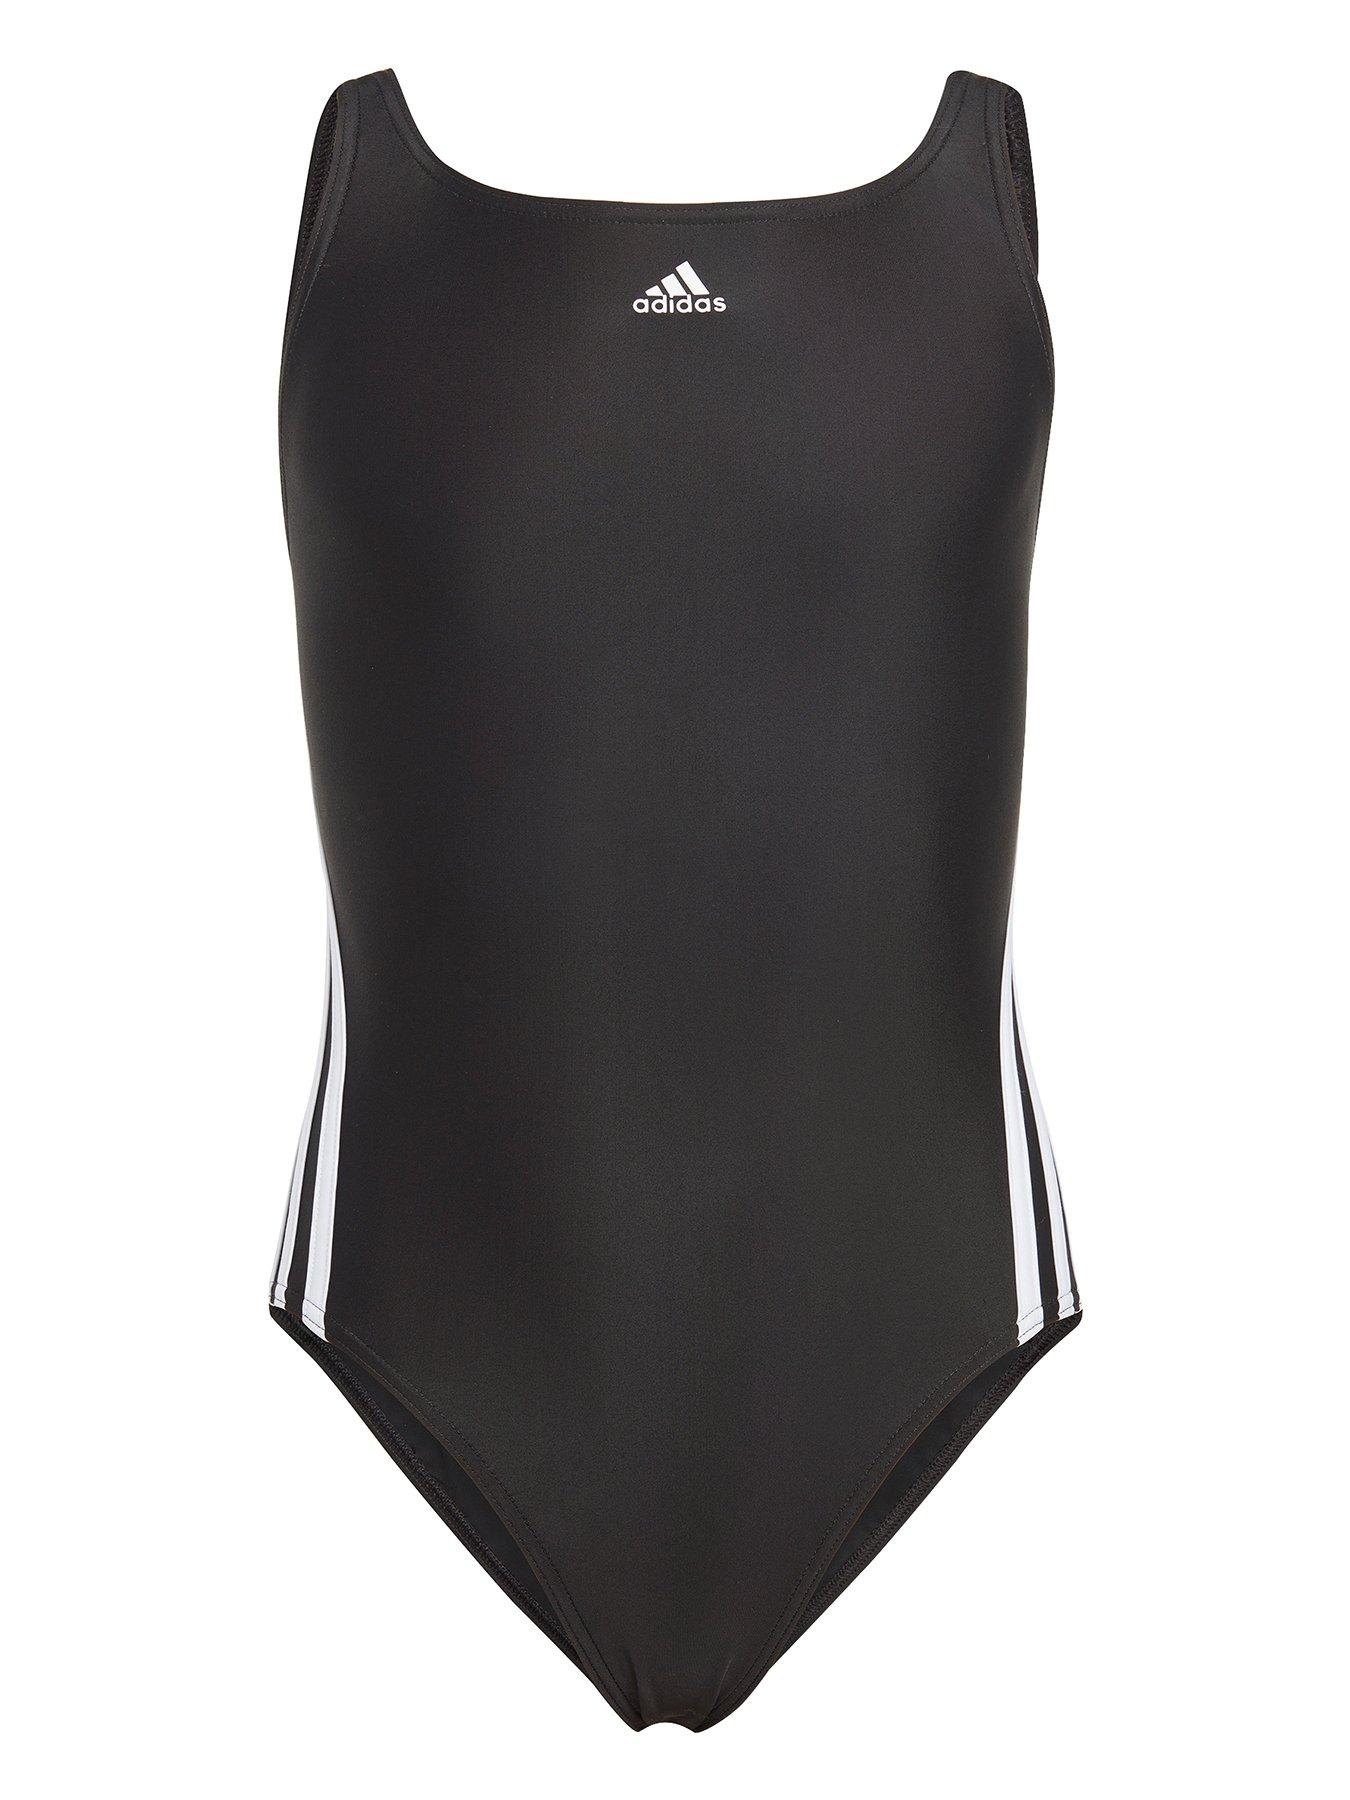 Adidas 3-Stripes Swimsuit (4)